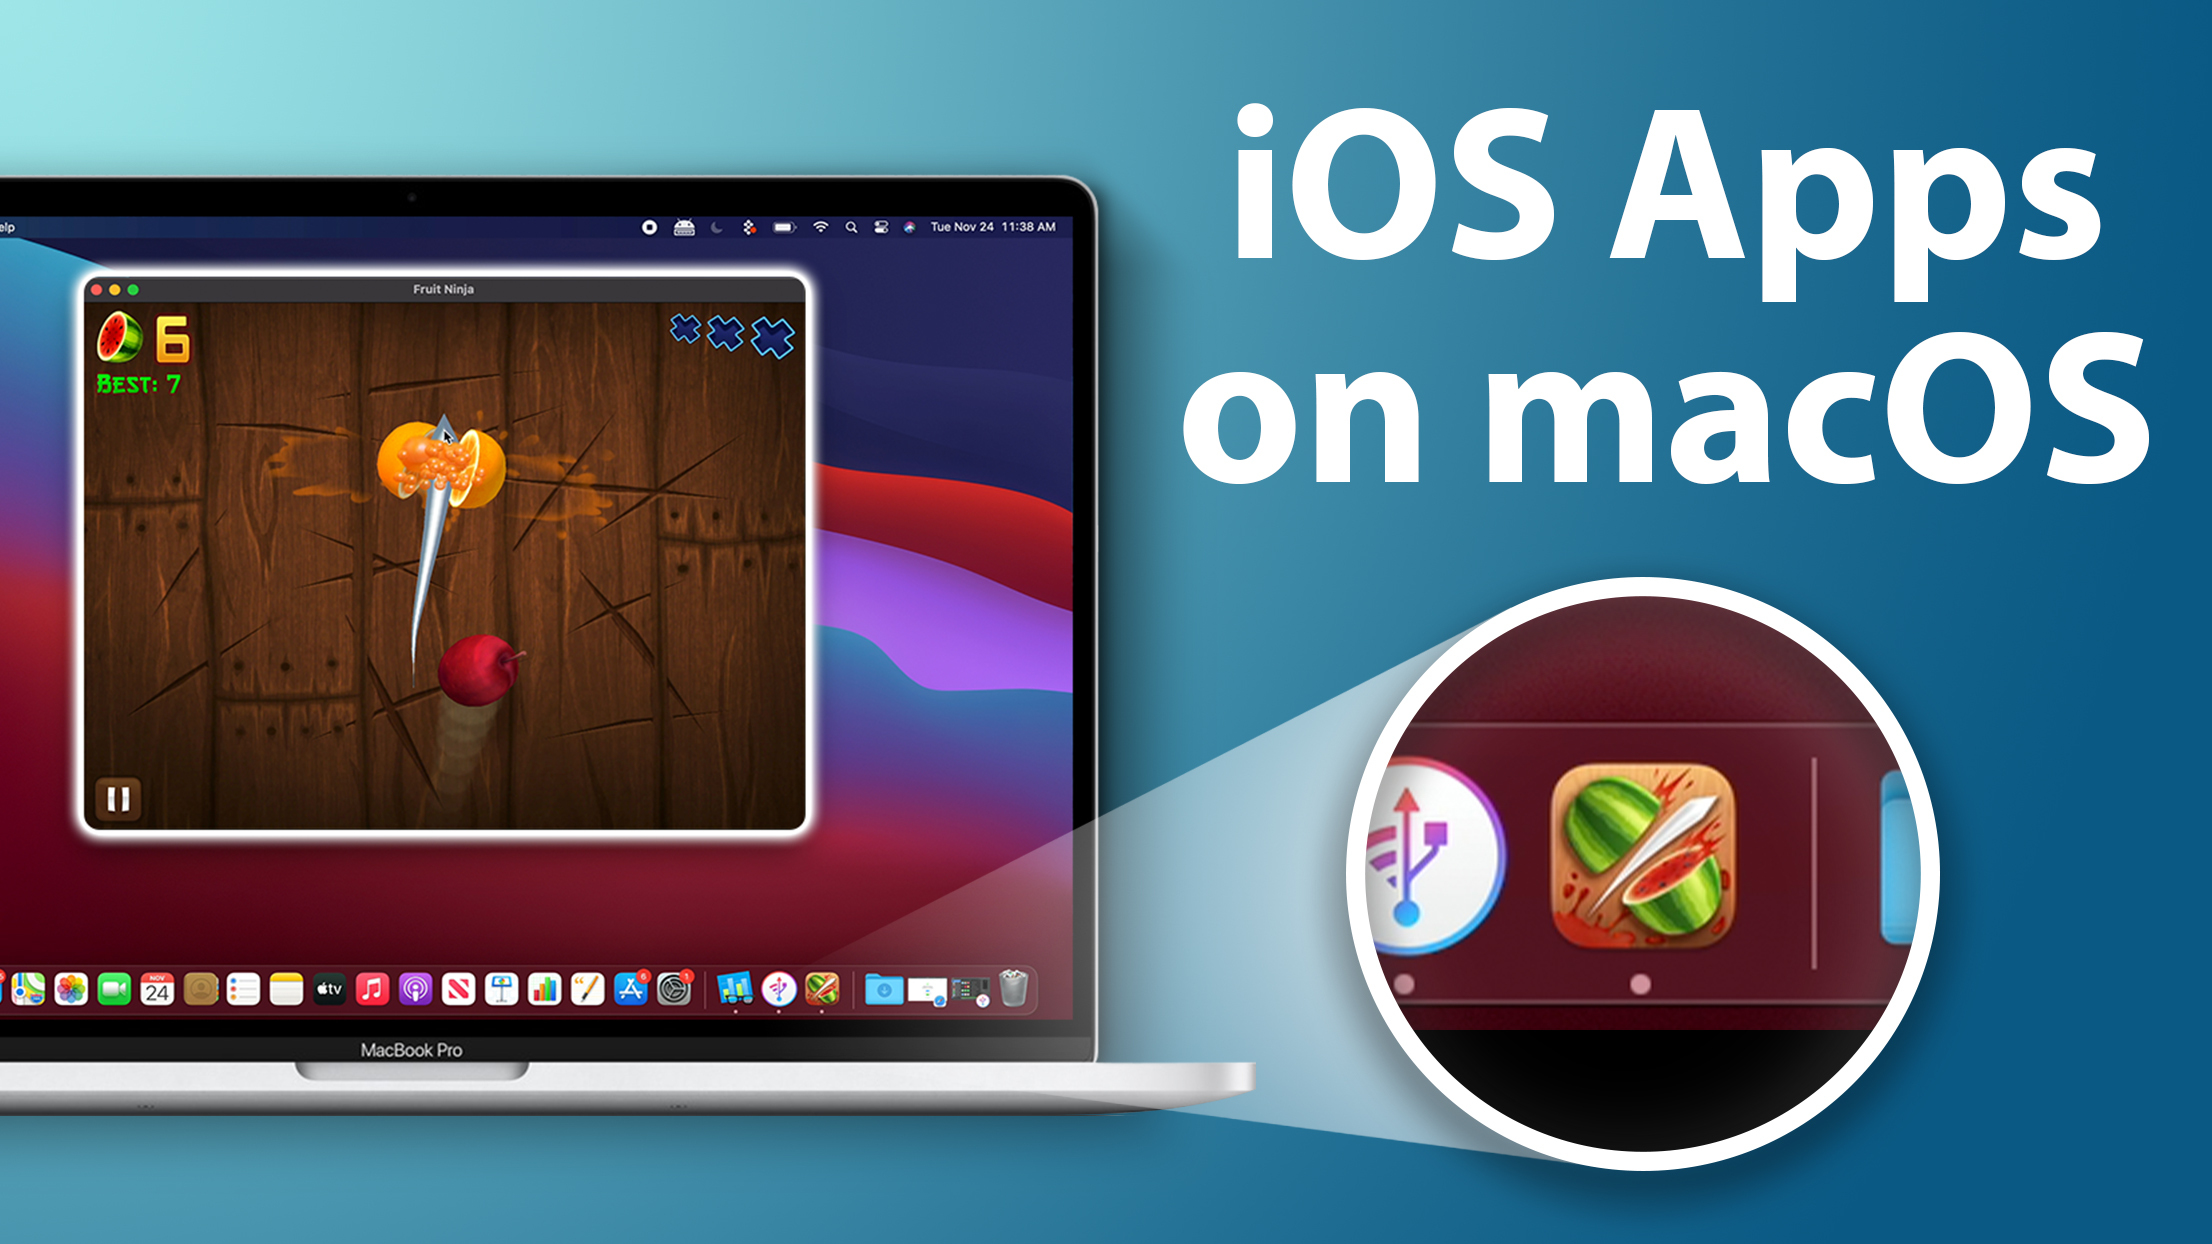 downbload apple photos app for mac